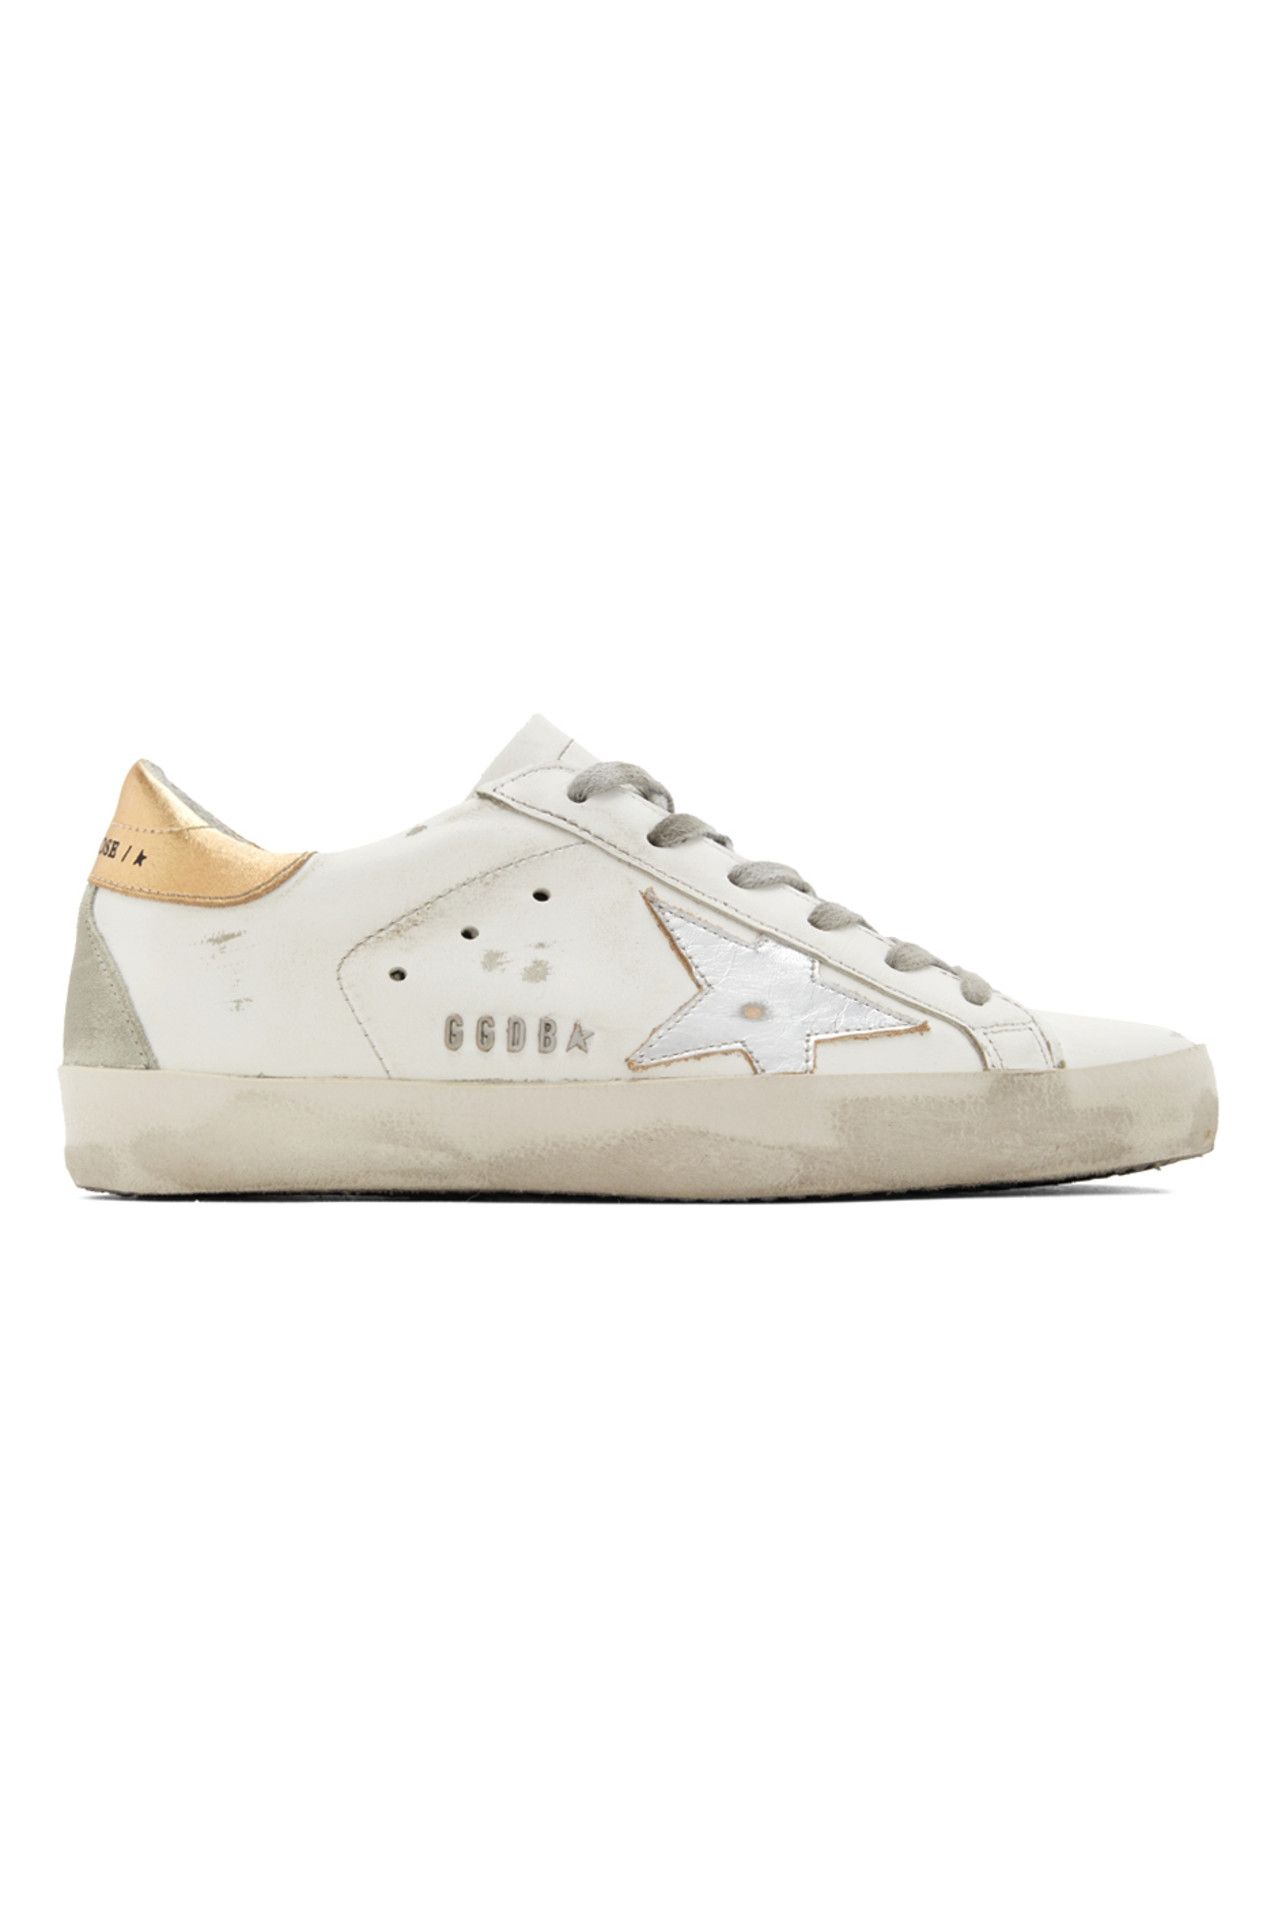 Golden Goose - SSENSE Exclusive White Superstar Sneakers | SSENSE